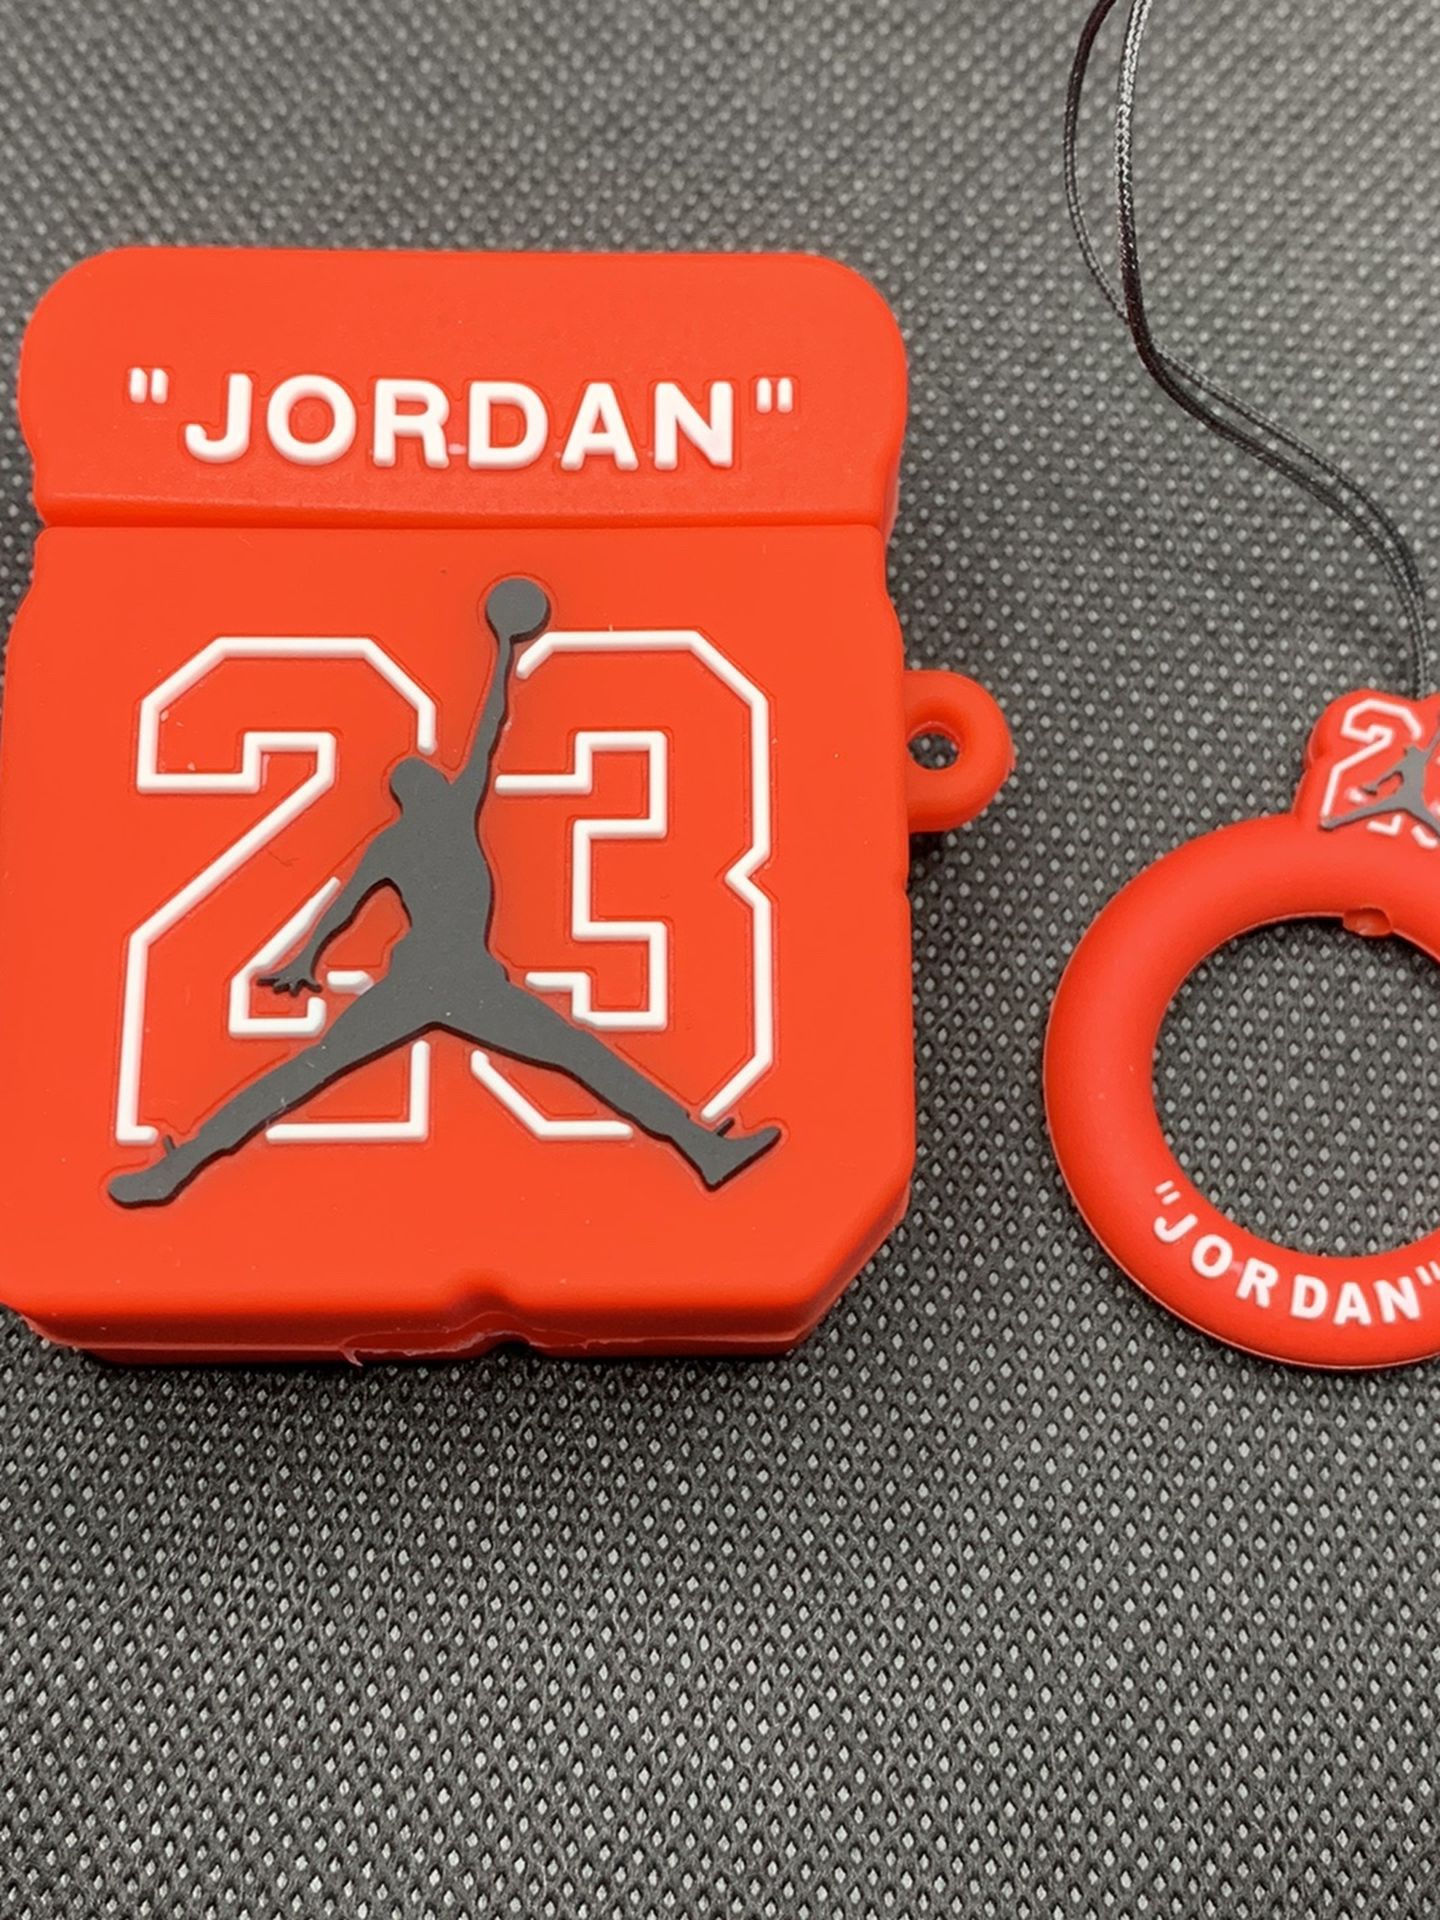 Jordan AirPod Case Cover Bundle For Generation 1 Or 2